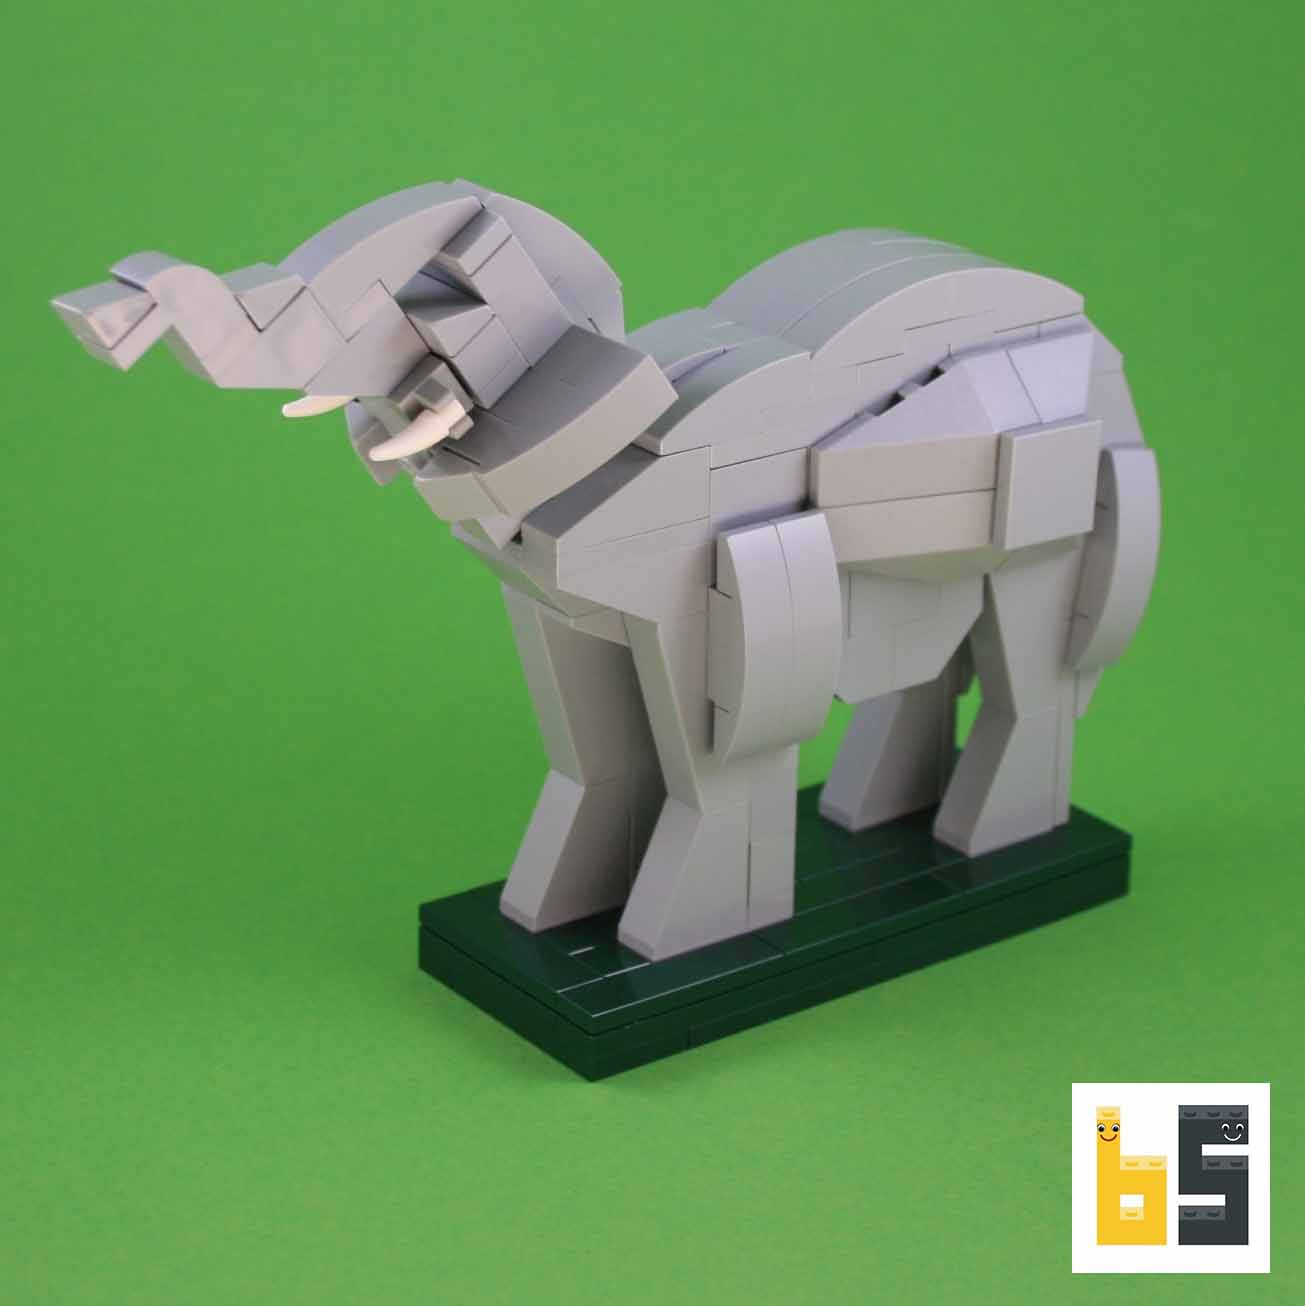 Giant panda – kit from LEGO® bricks – The Brickworms